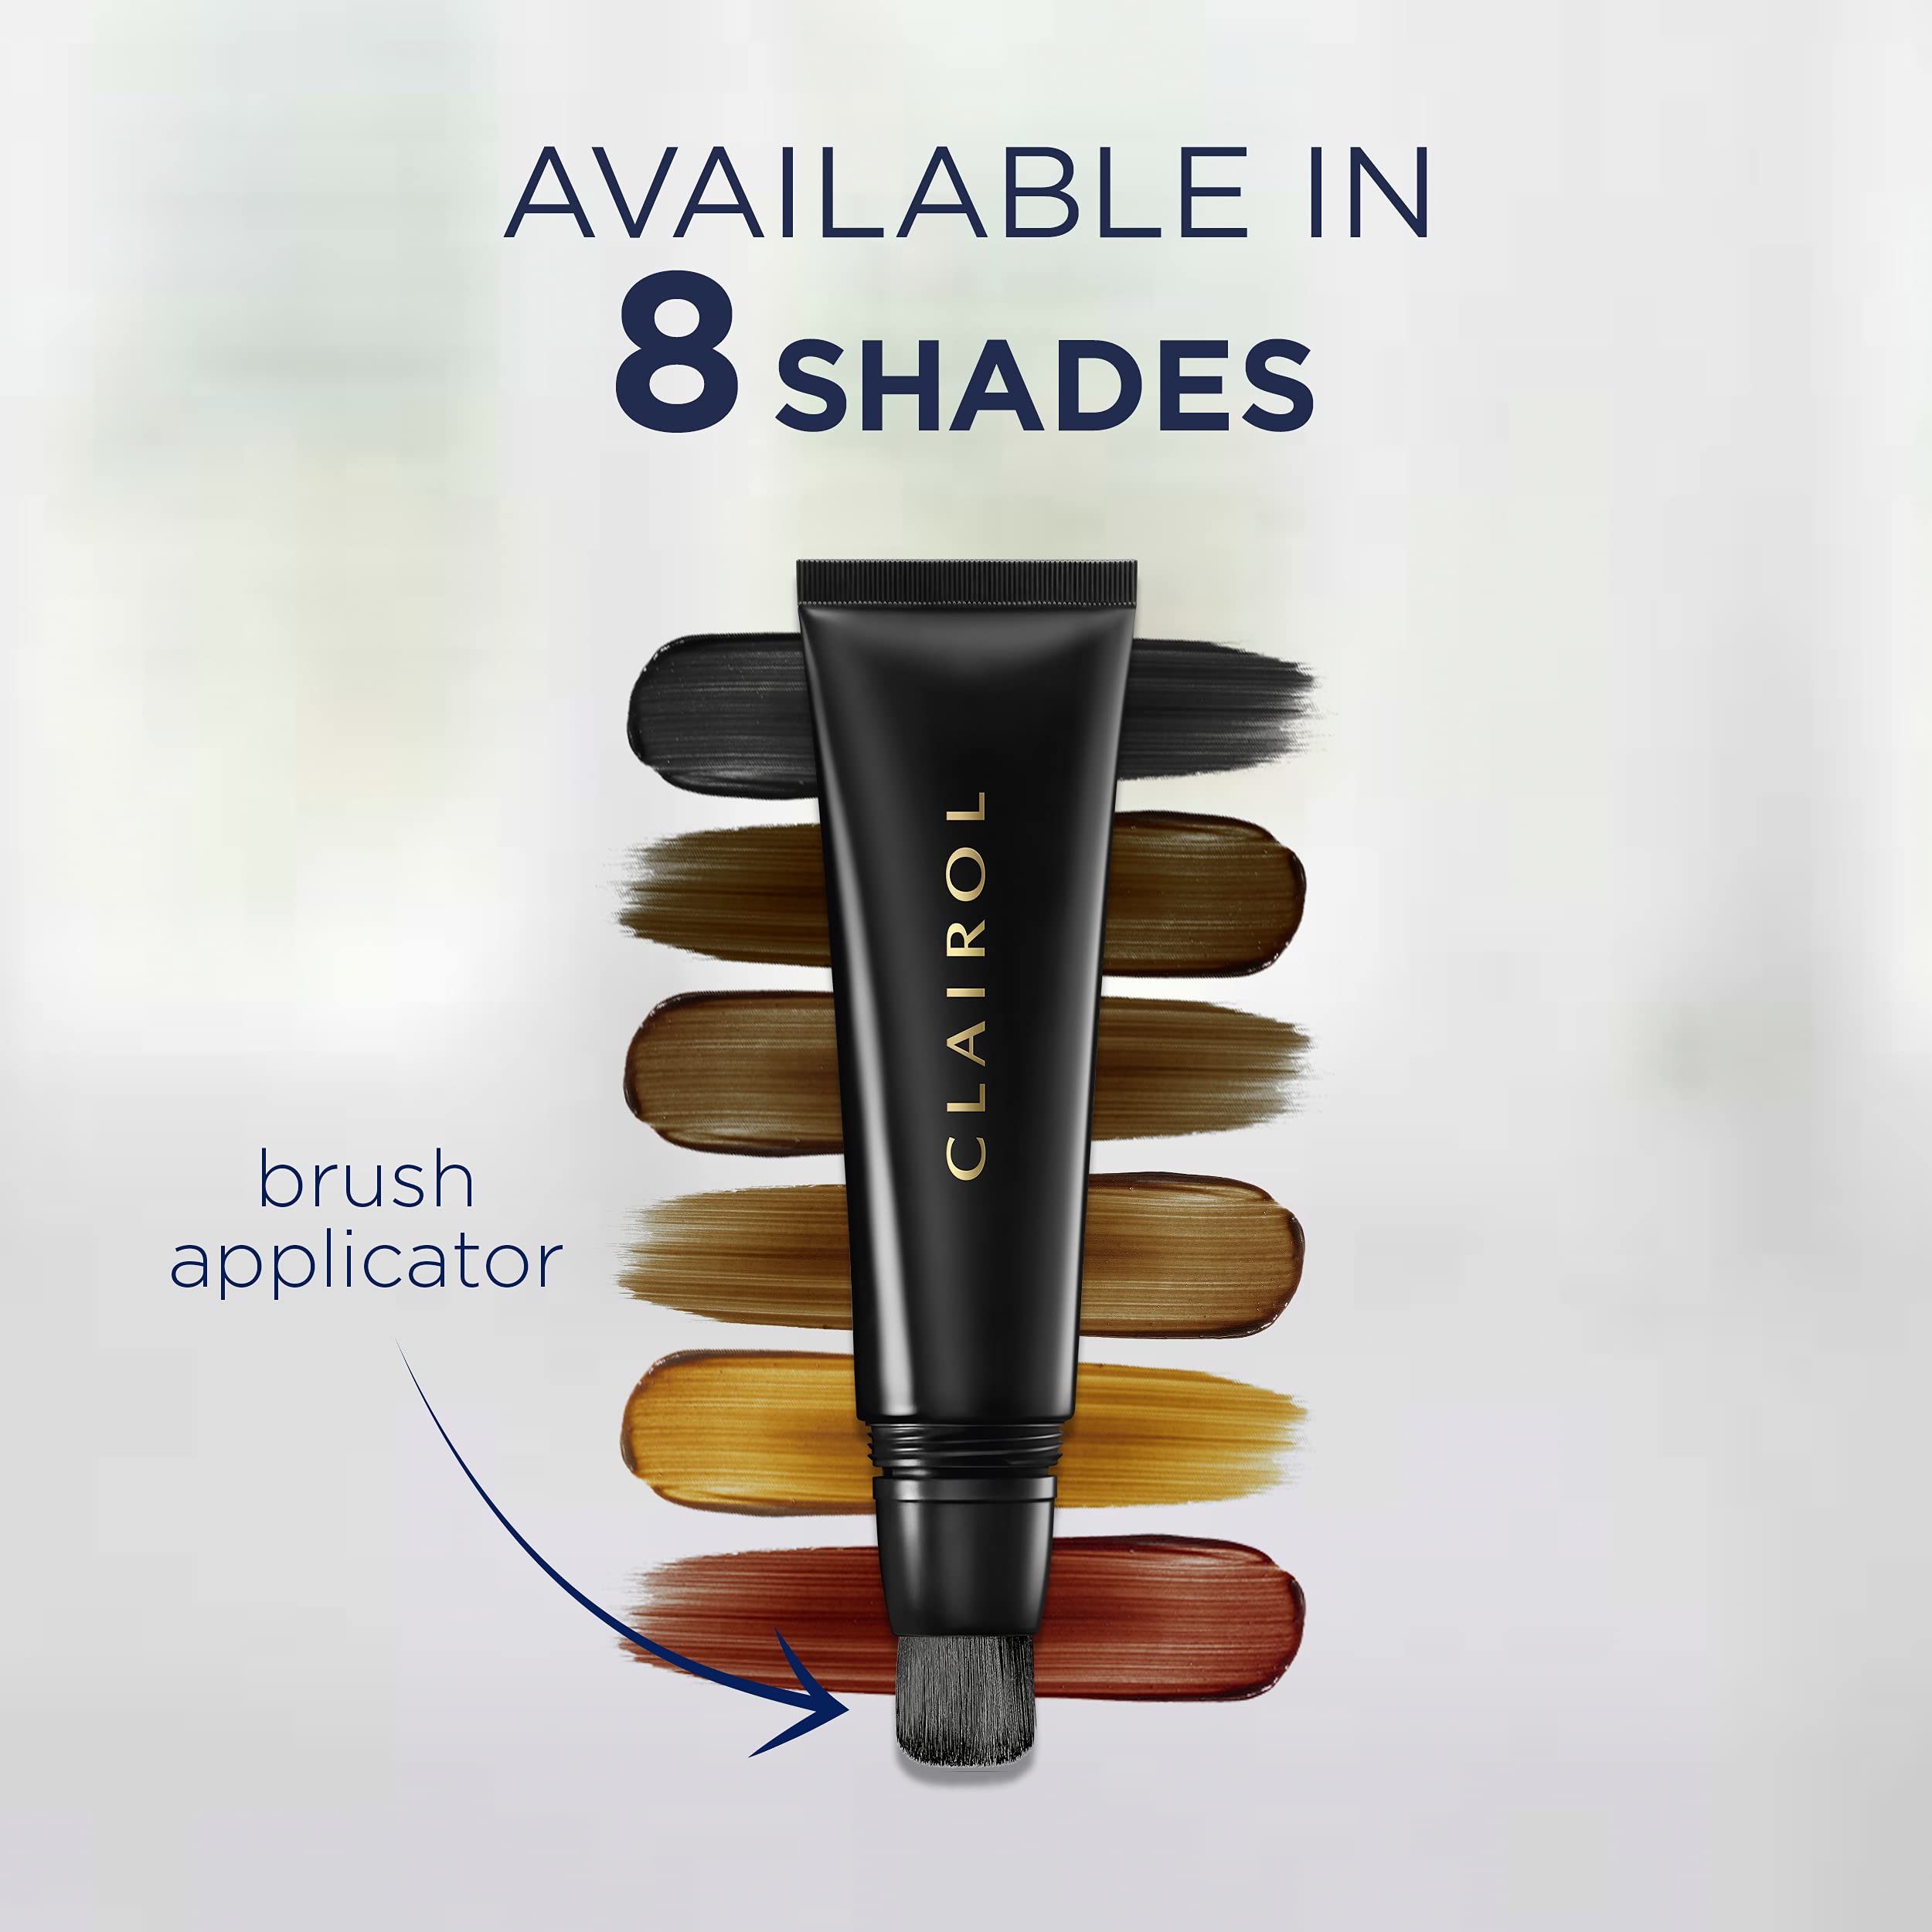 Clairol Root Touch-Up Semi-Permanent Hair Color Blending Gel, 4 Dark Brown, Pack of 2